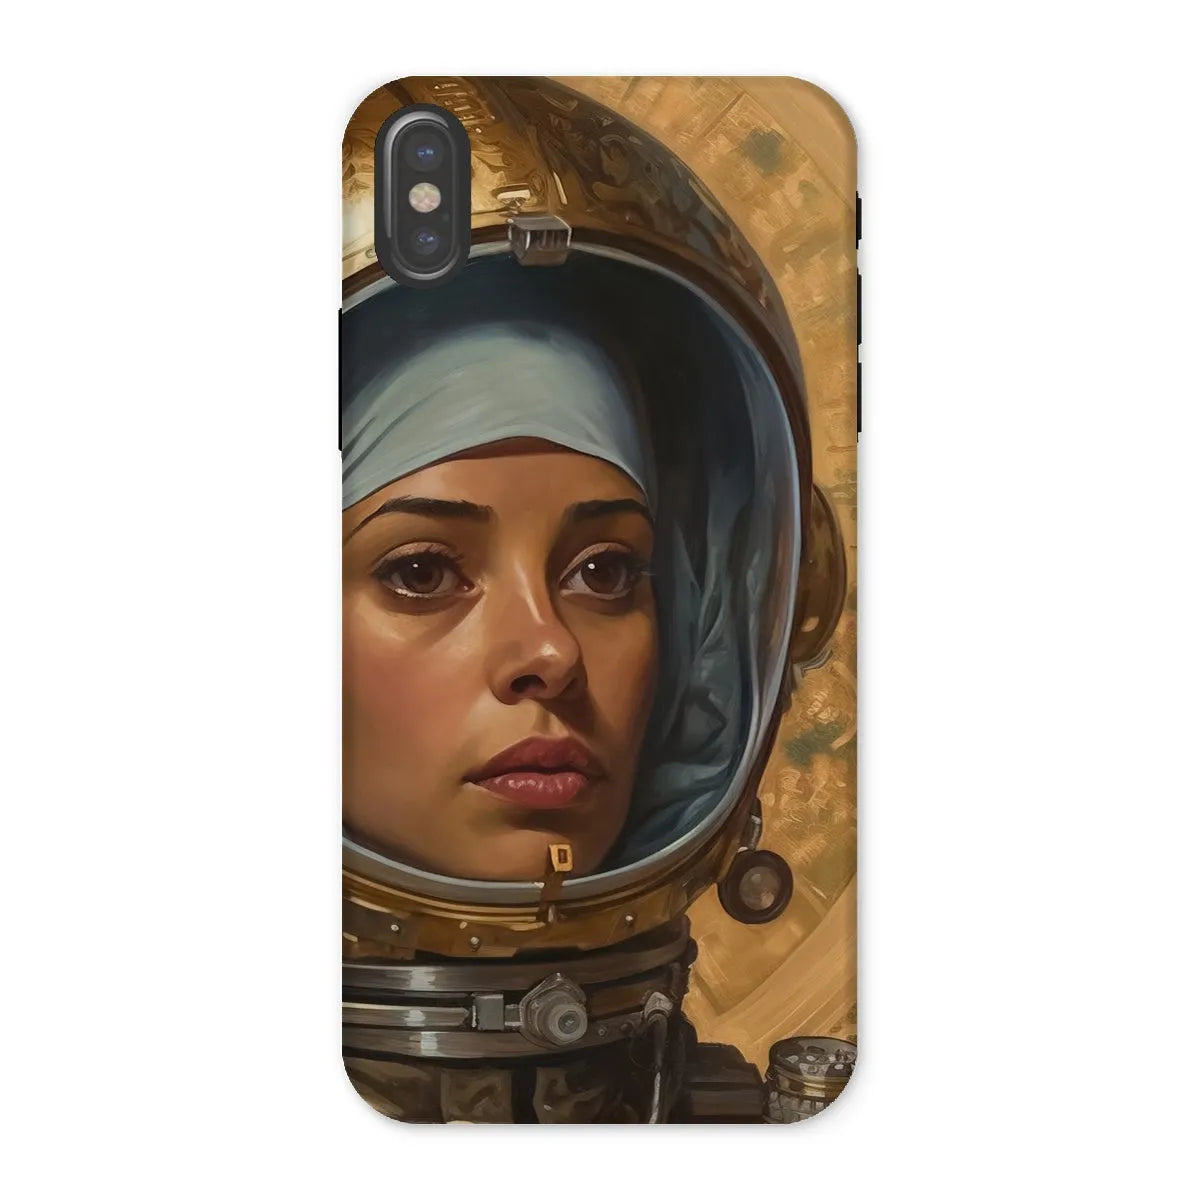 Amira - Lesbian Muslim Astronaut Aesthetic Phone Case - Iphone x / Matte - Mobile Phone Cases - Aesthetic Art